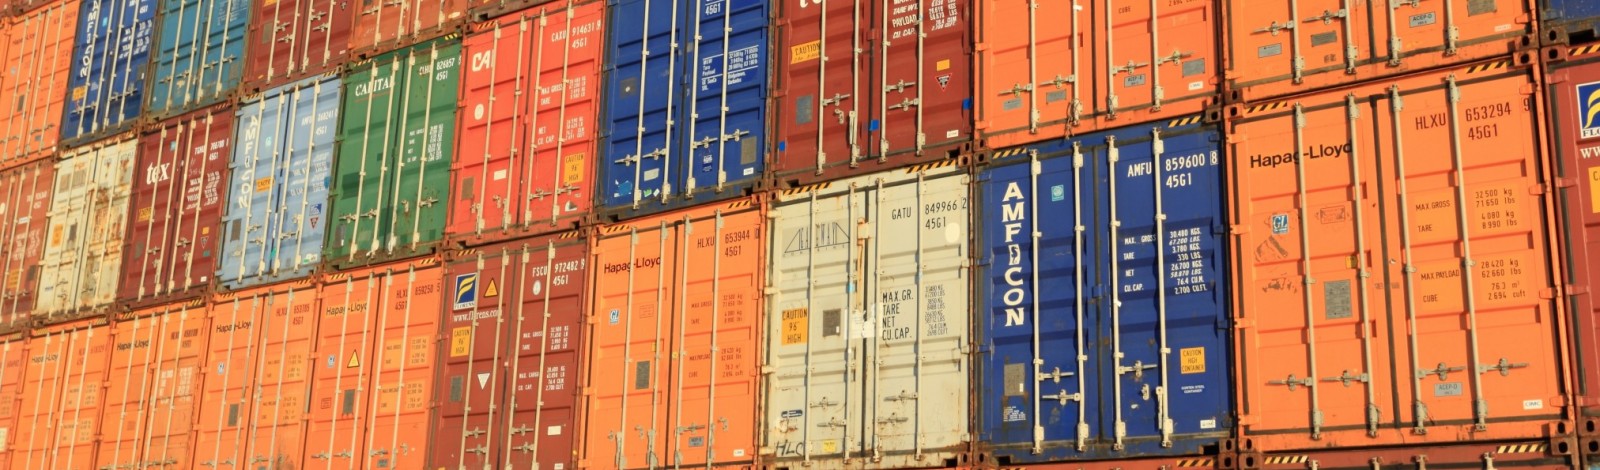 belgium antwerp shipping container 163726